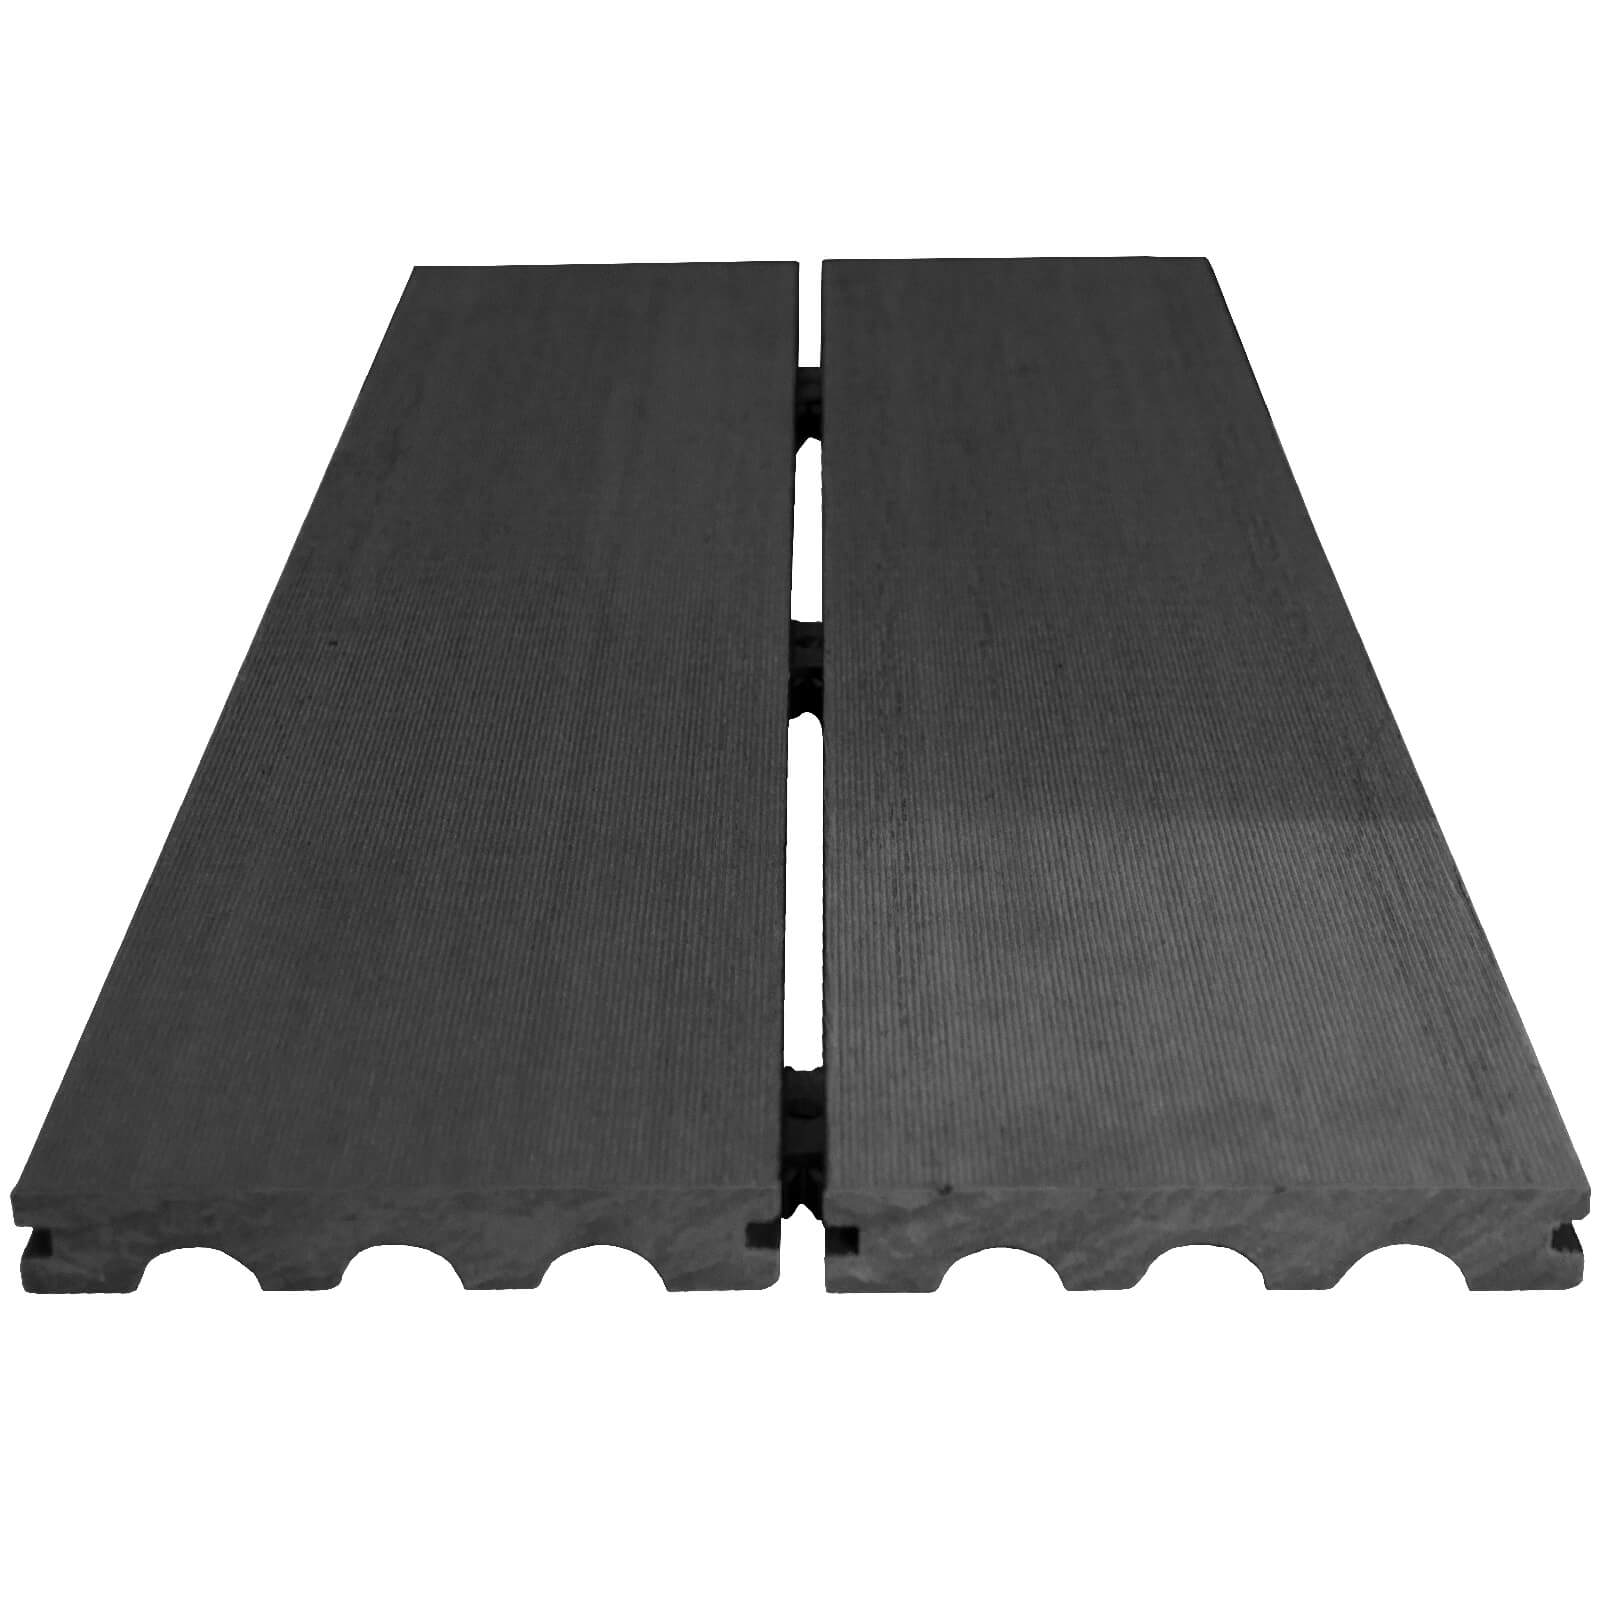 Bridge Board Composite Decking 20 Pack Ebony - 6.96 m2